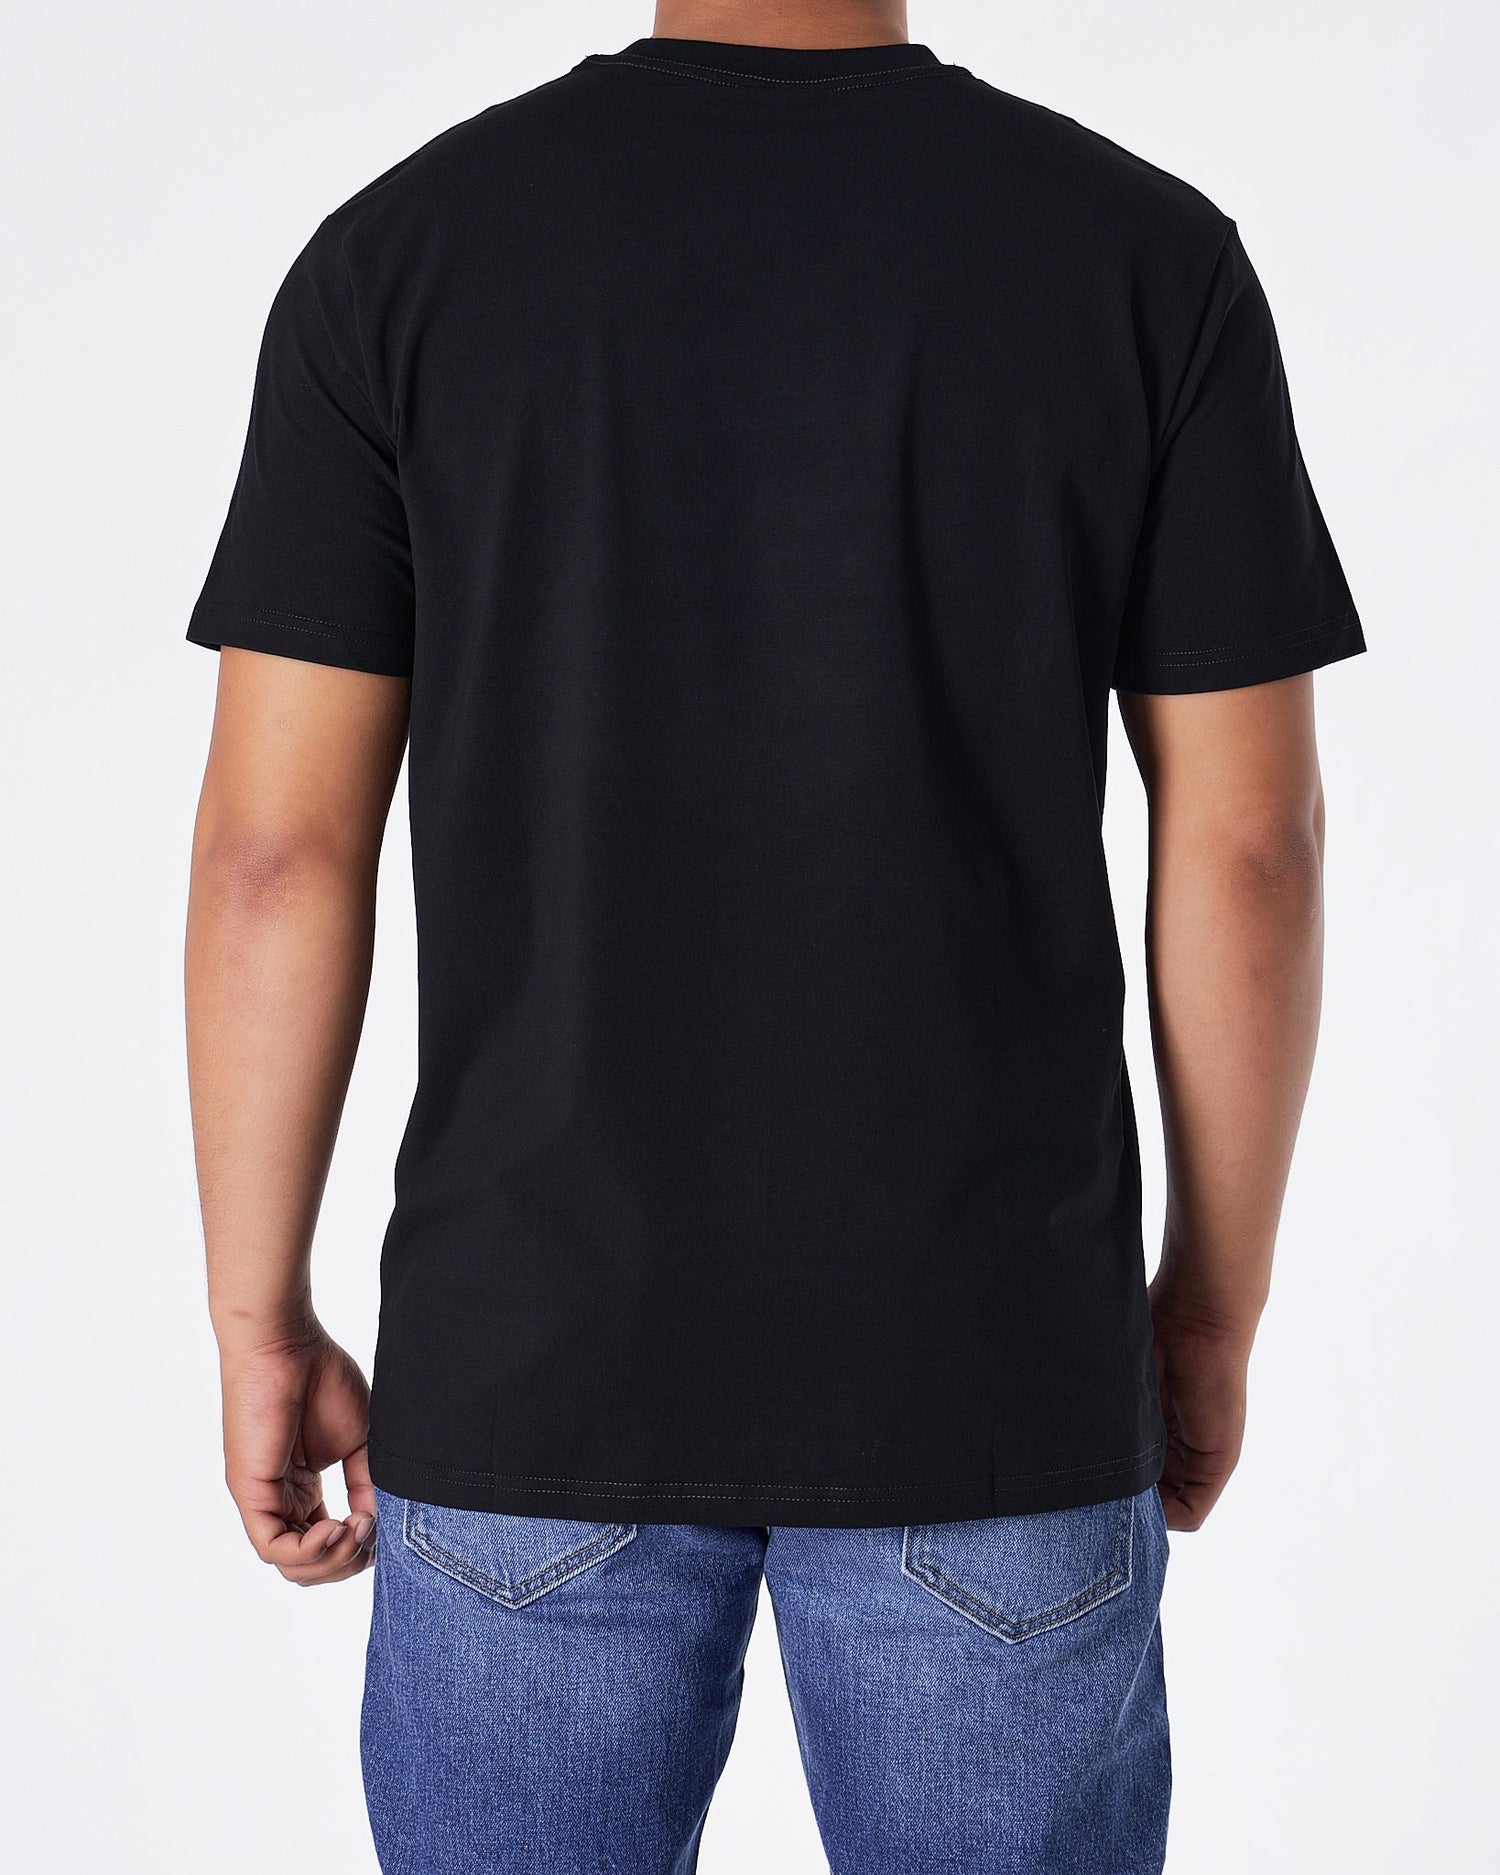 MOI OUTFIT-AD Emboss Men Black T-Shirt 16.90